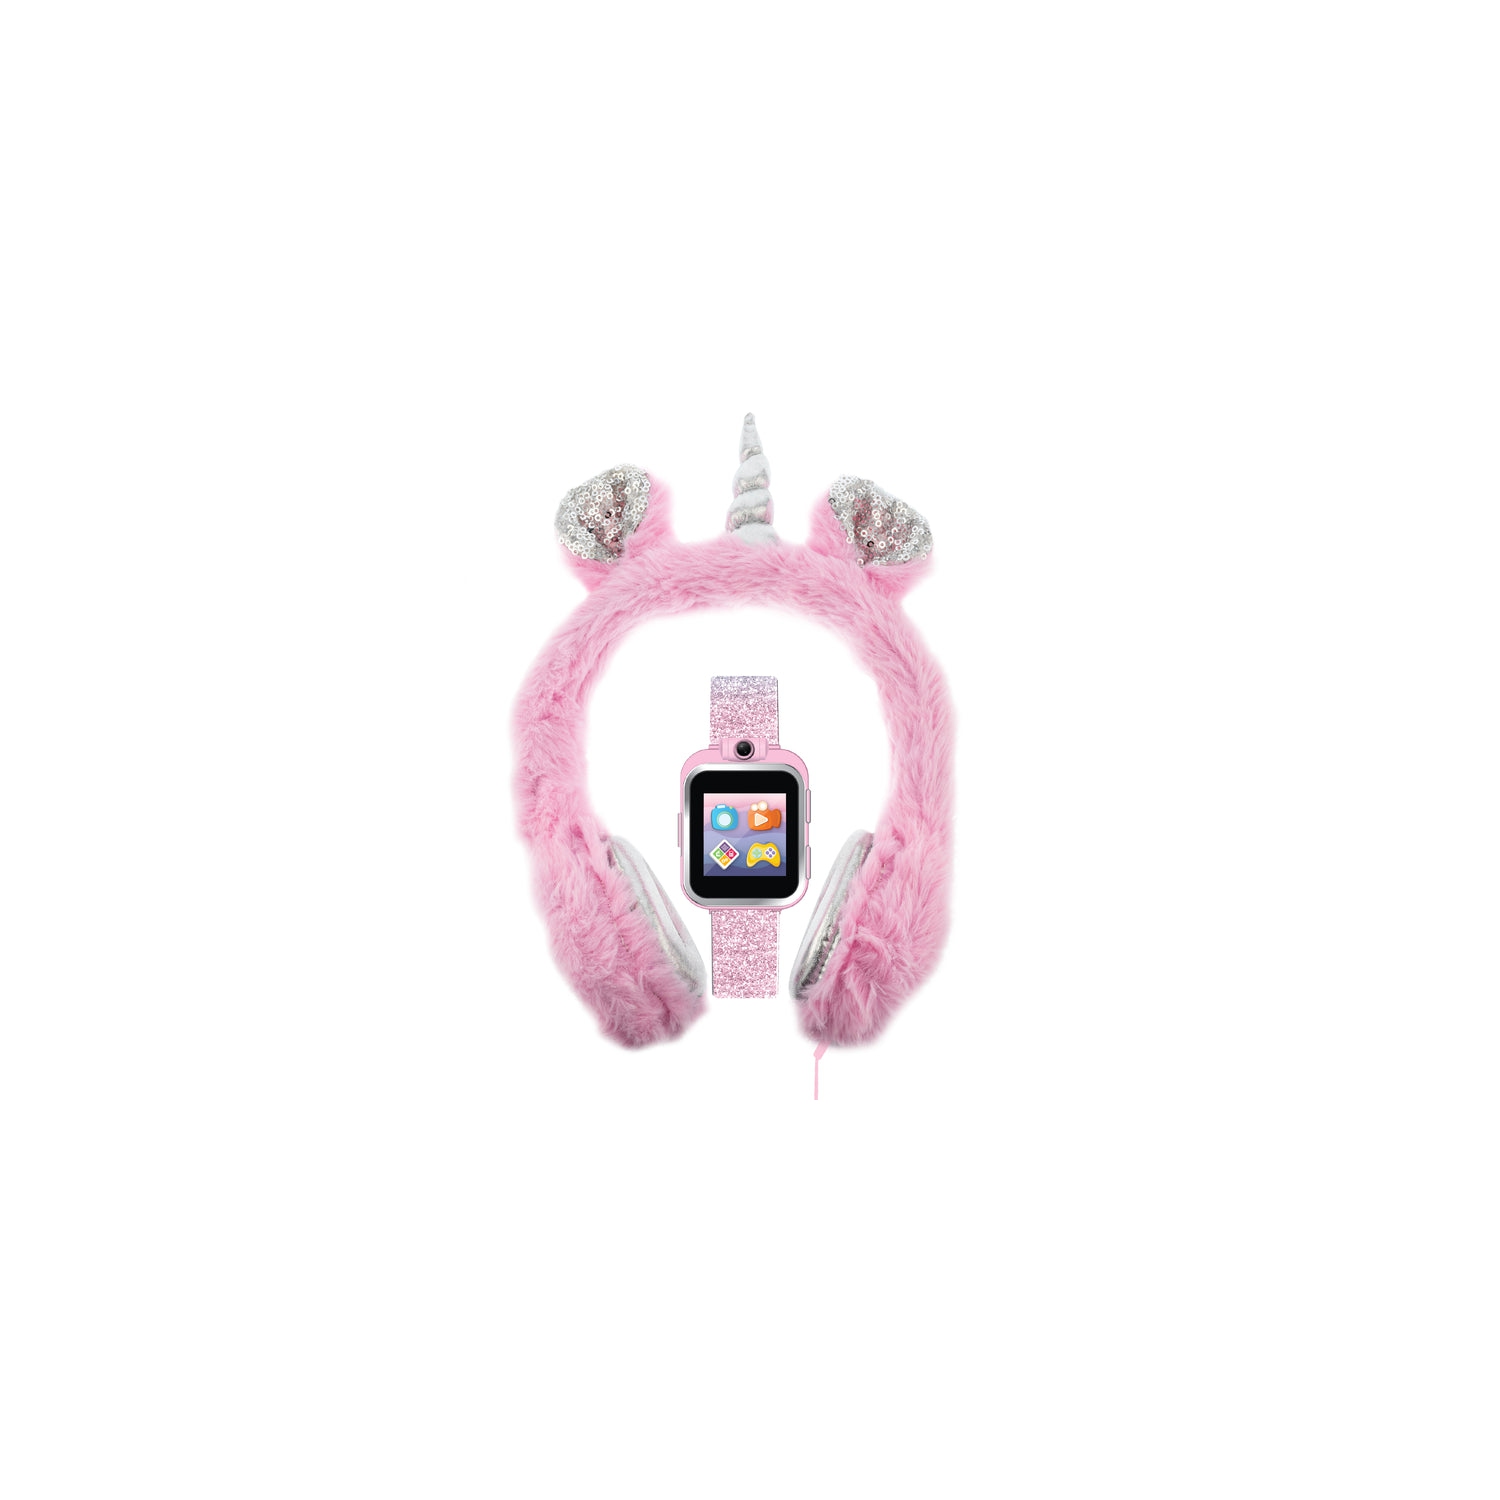 PlayZoom 2 Kids Smartwatch With Earphones: Blush Glitter Fuzzy Unicorn